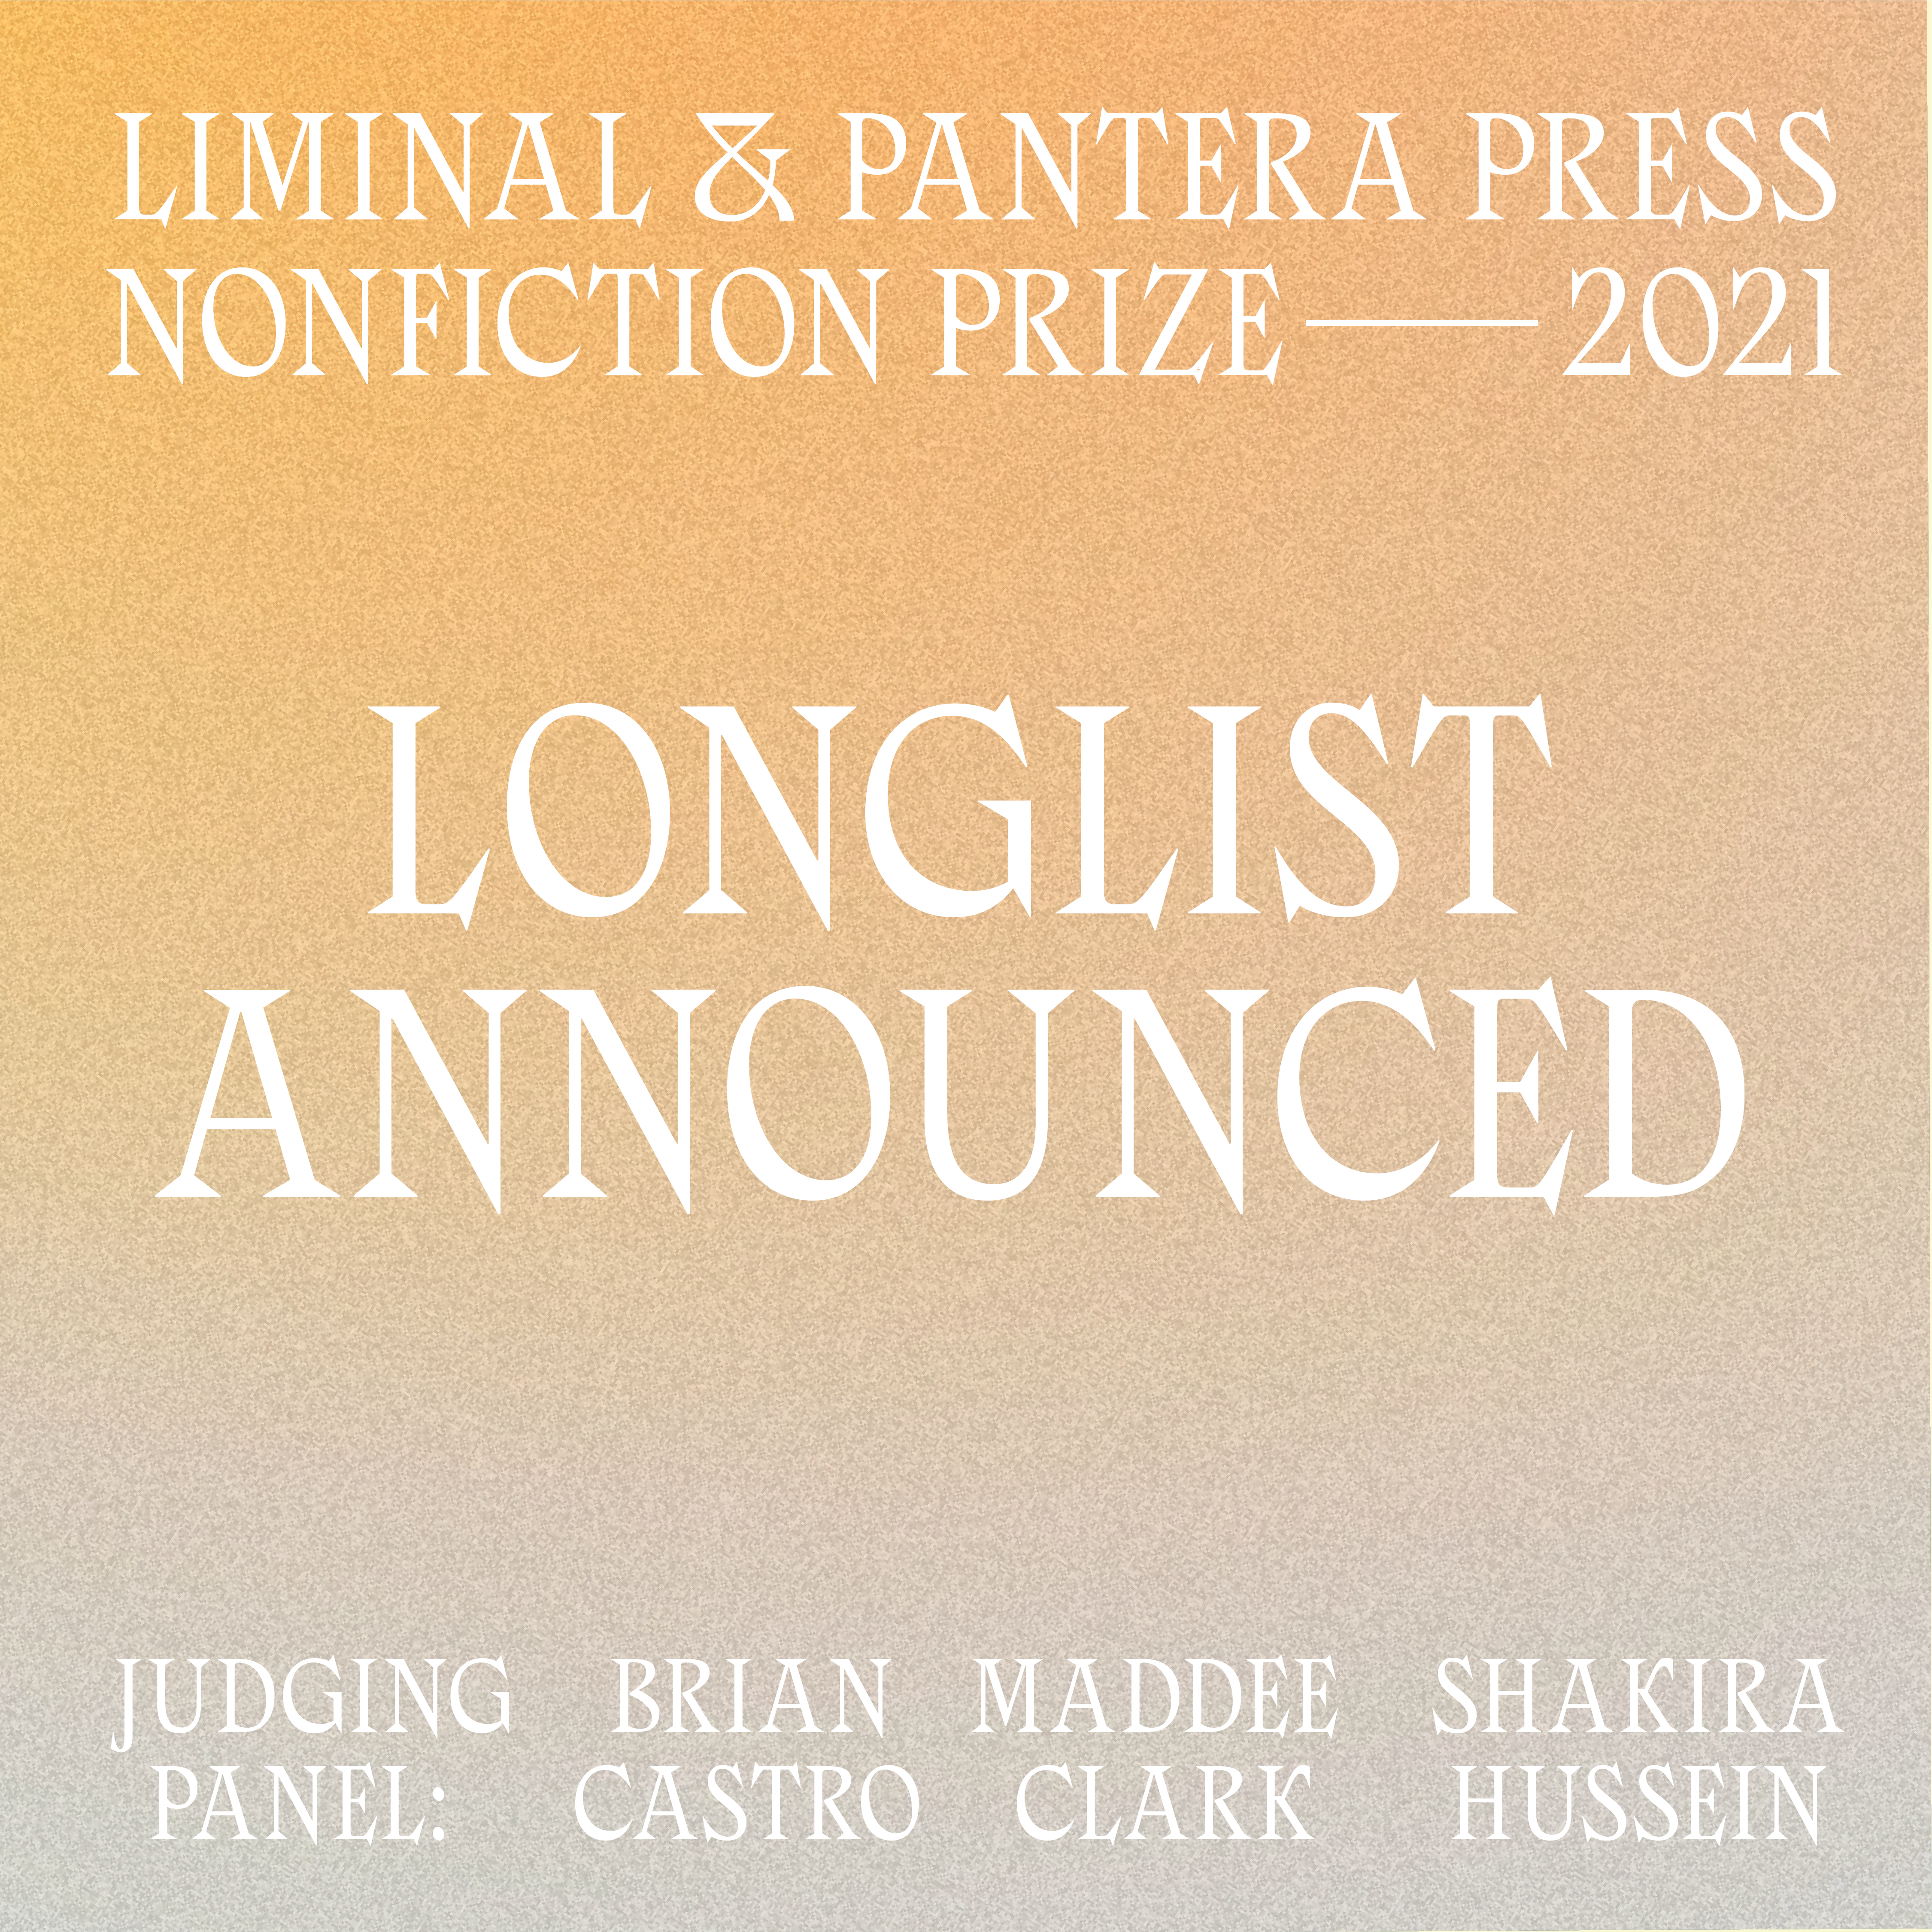 Liminal and Pantera Press Nonfiction Prize longlist announced event image